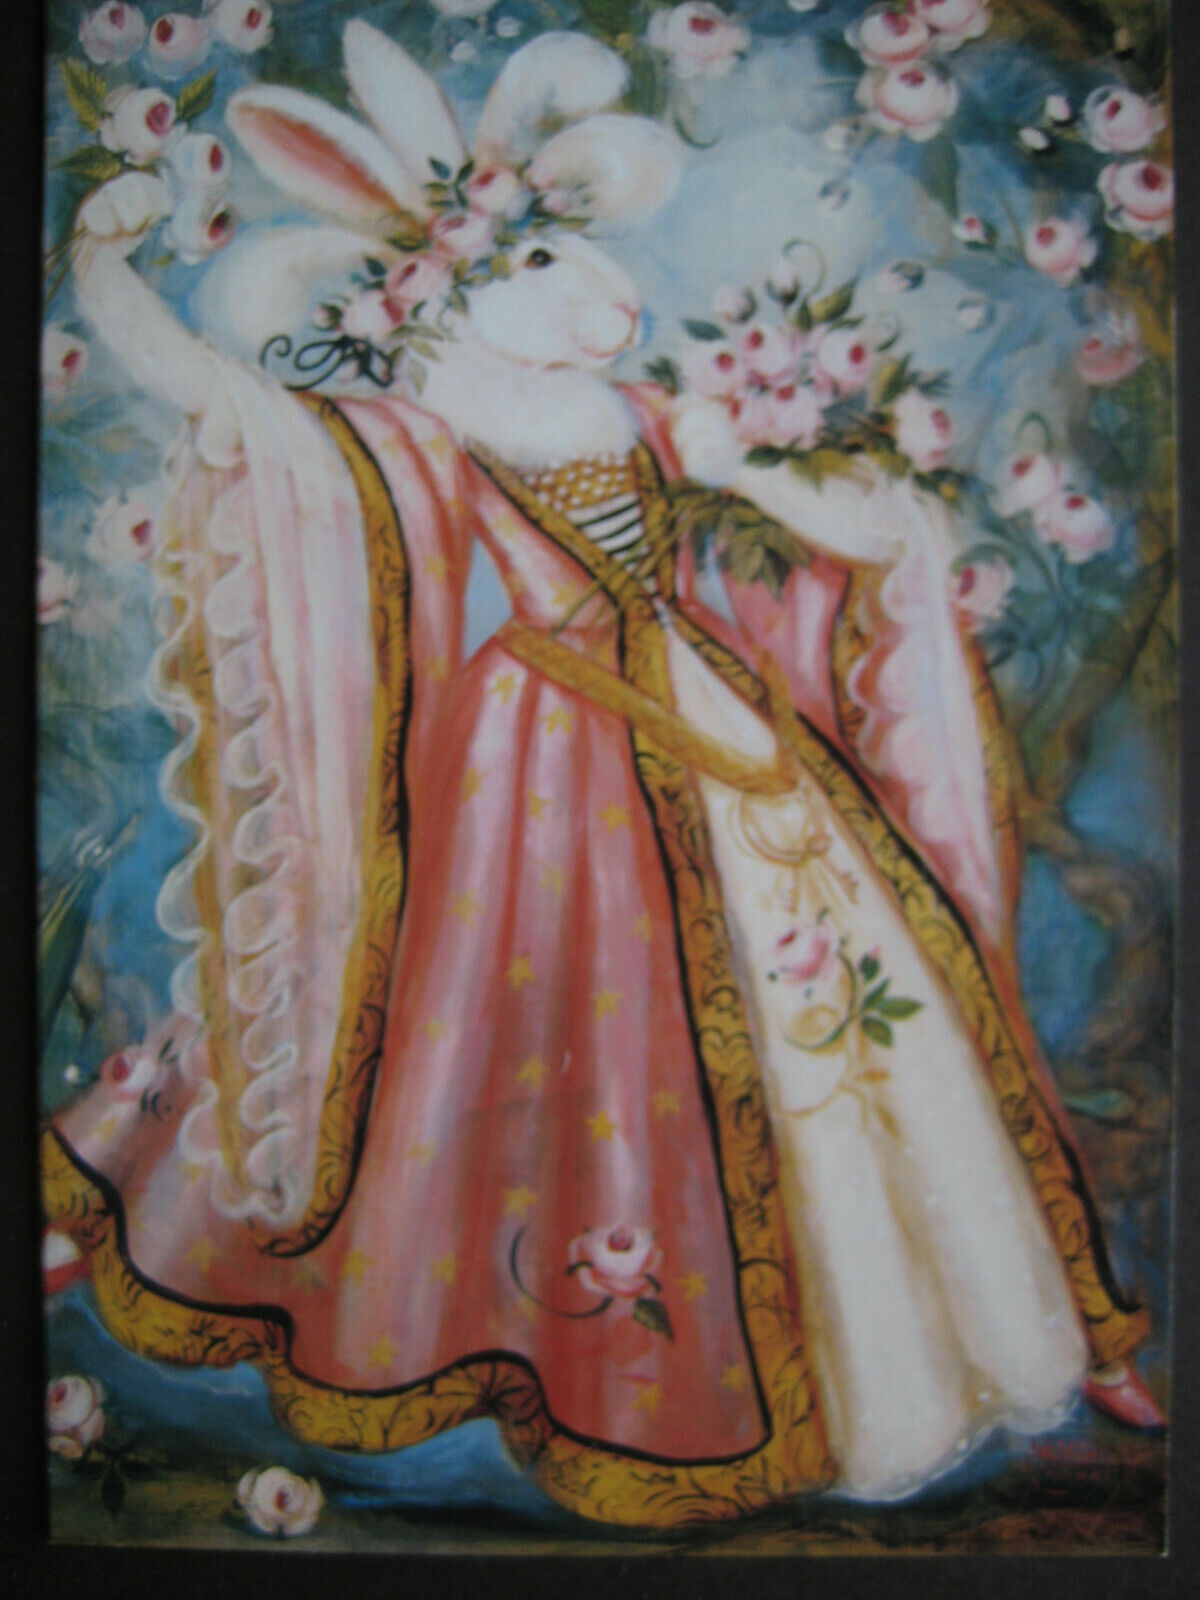 UNUSED 1990s vintage greeting card Pamela Silin-Palmer Rabbit In Gown w/ Roses